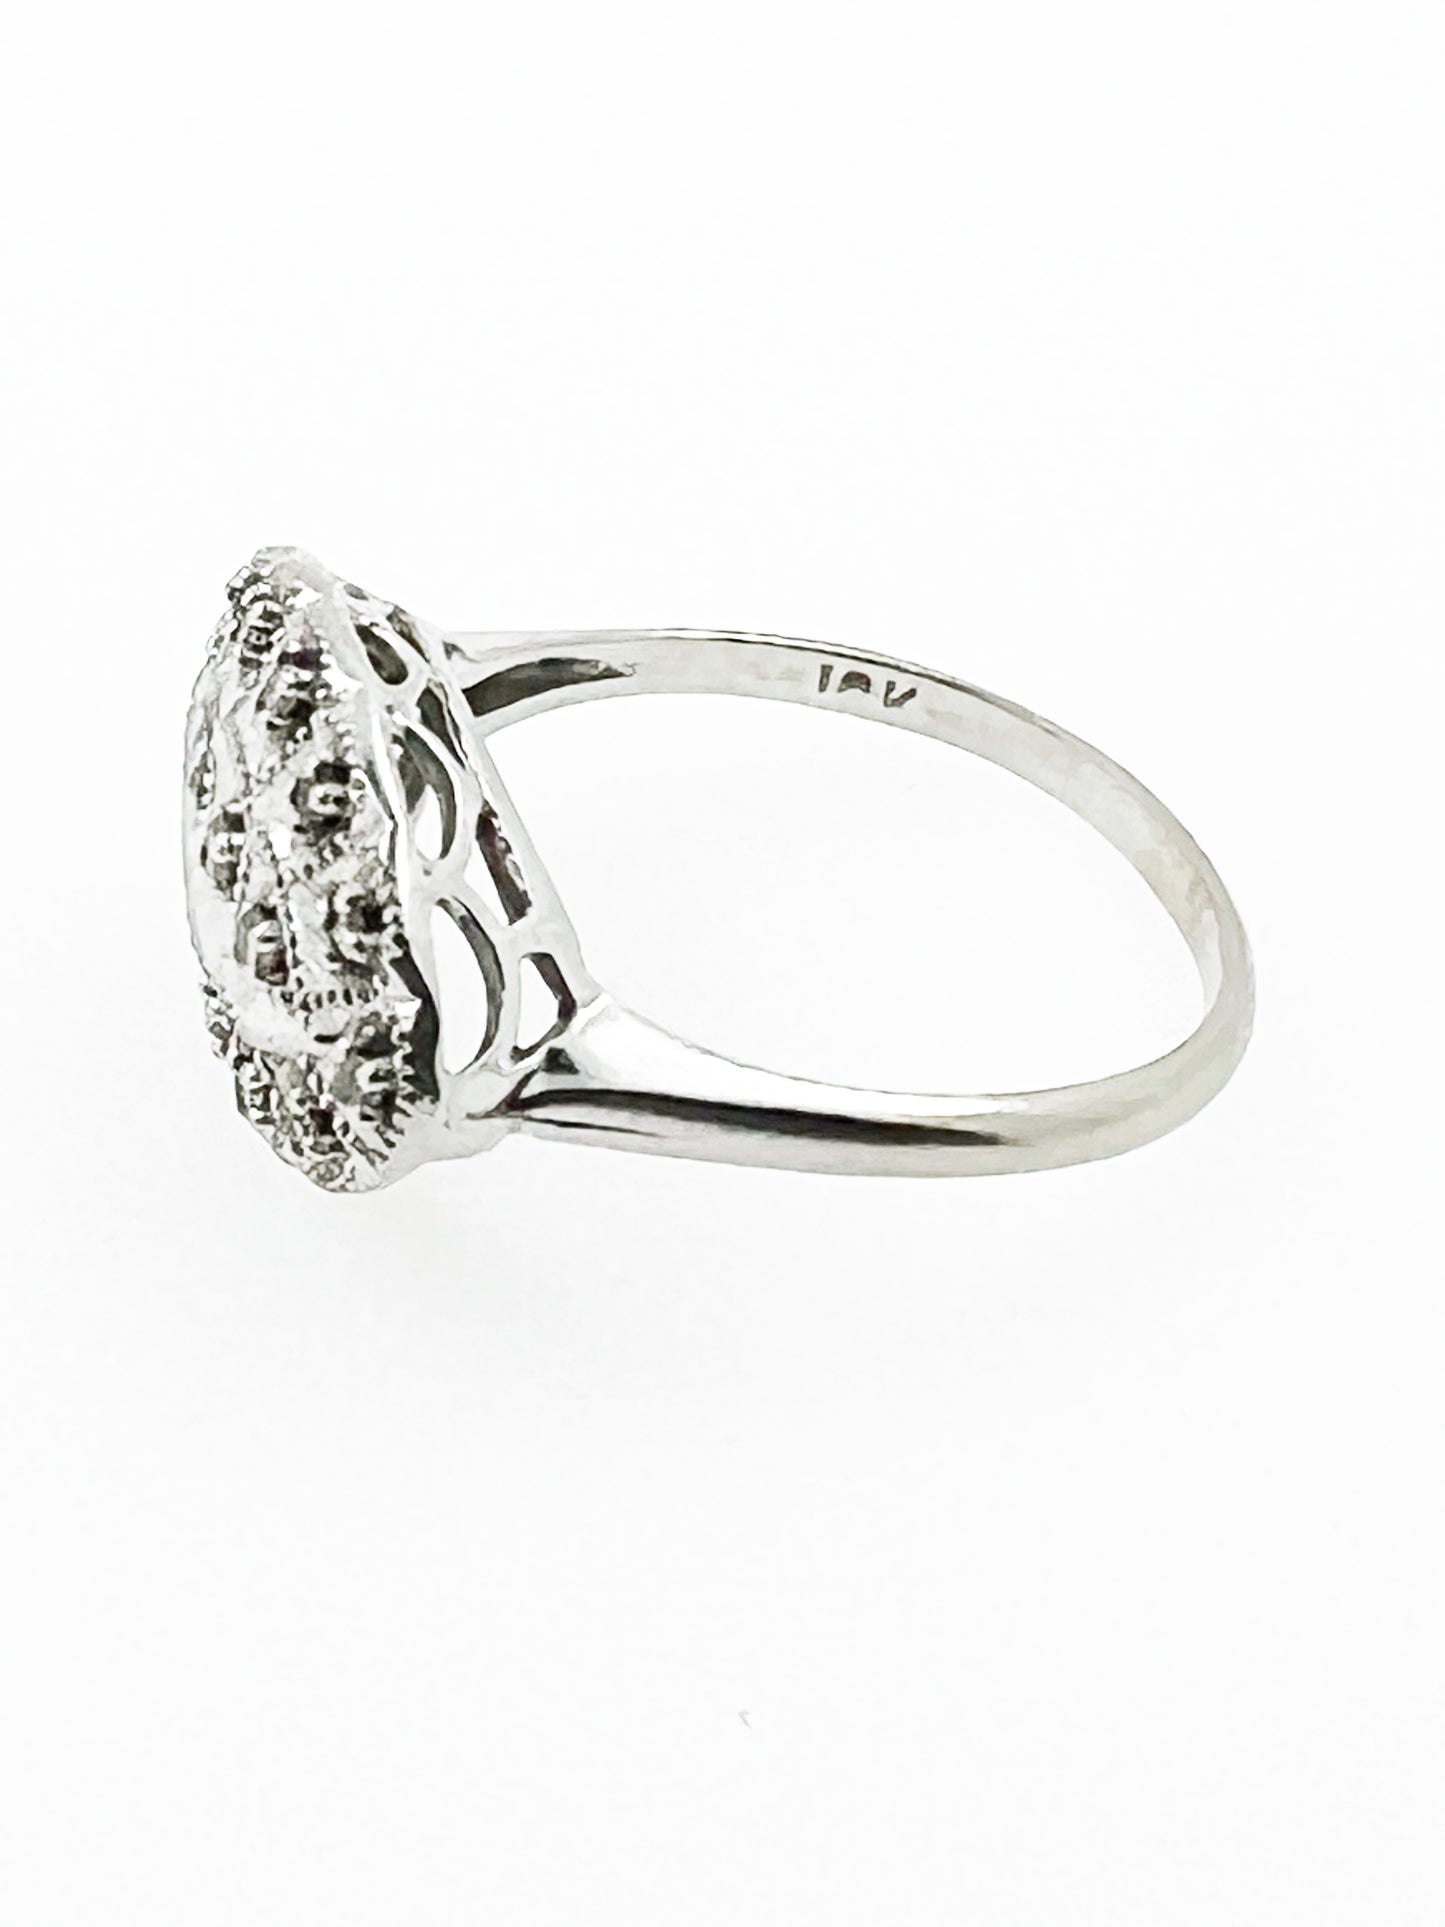 Art Deco Era Natural Diamond Ring in 18k White Gold